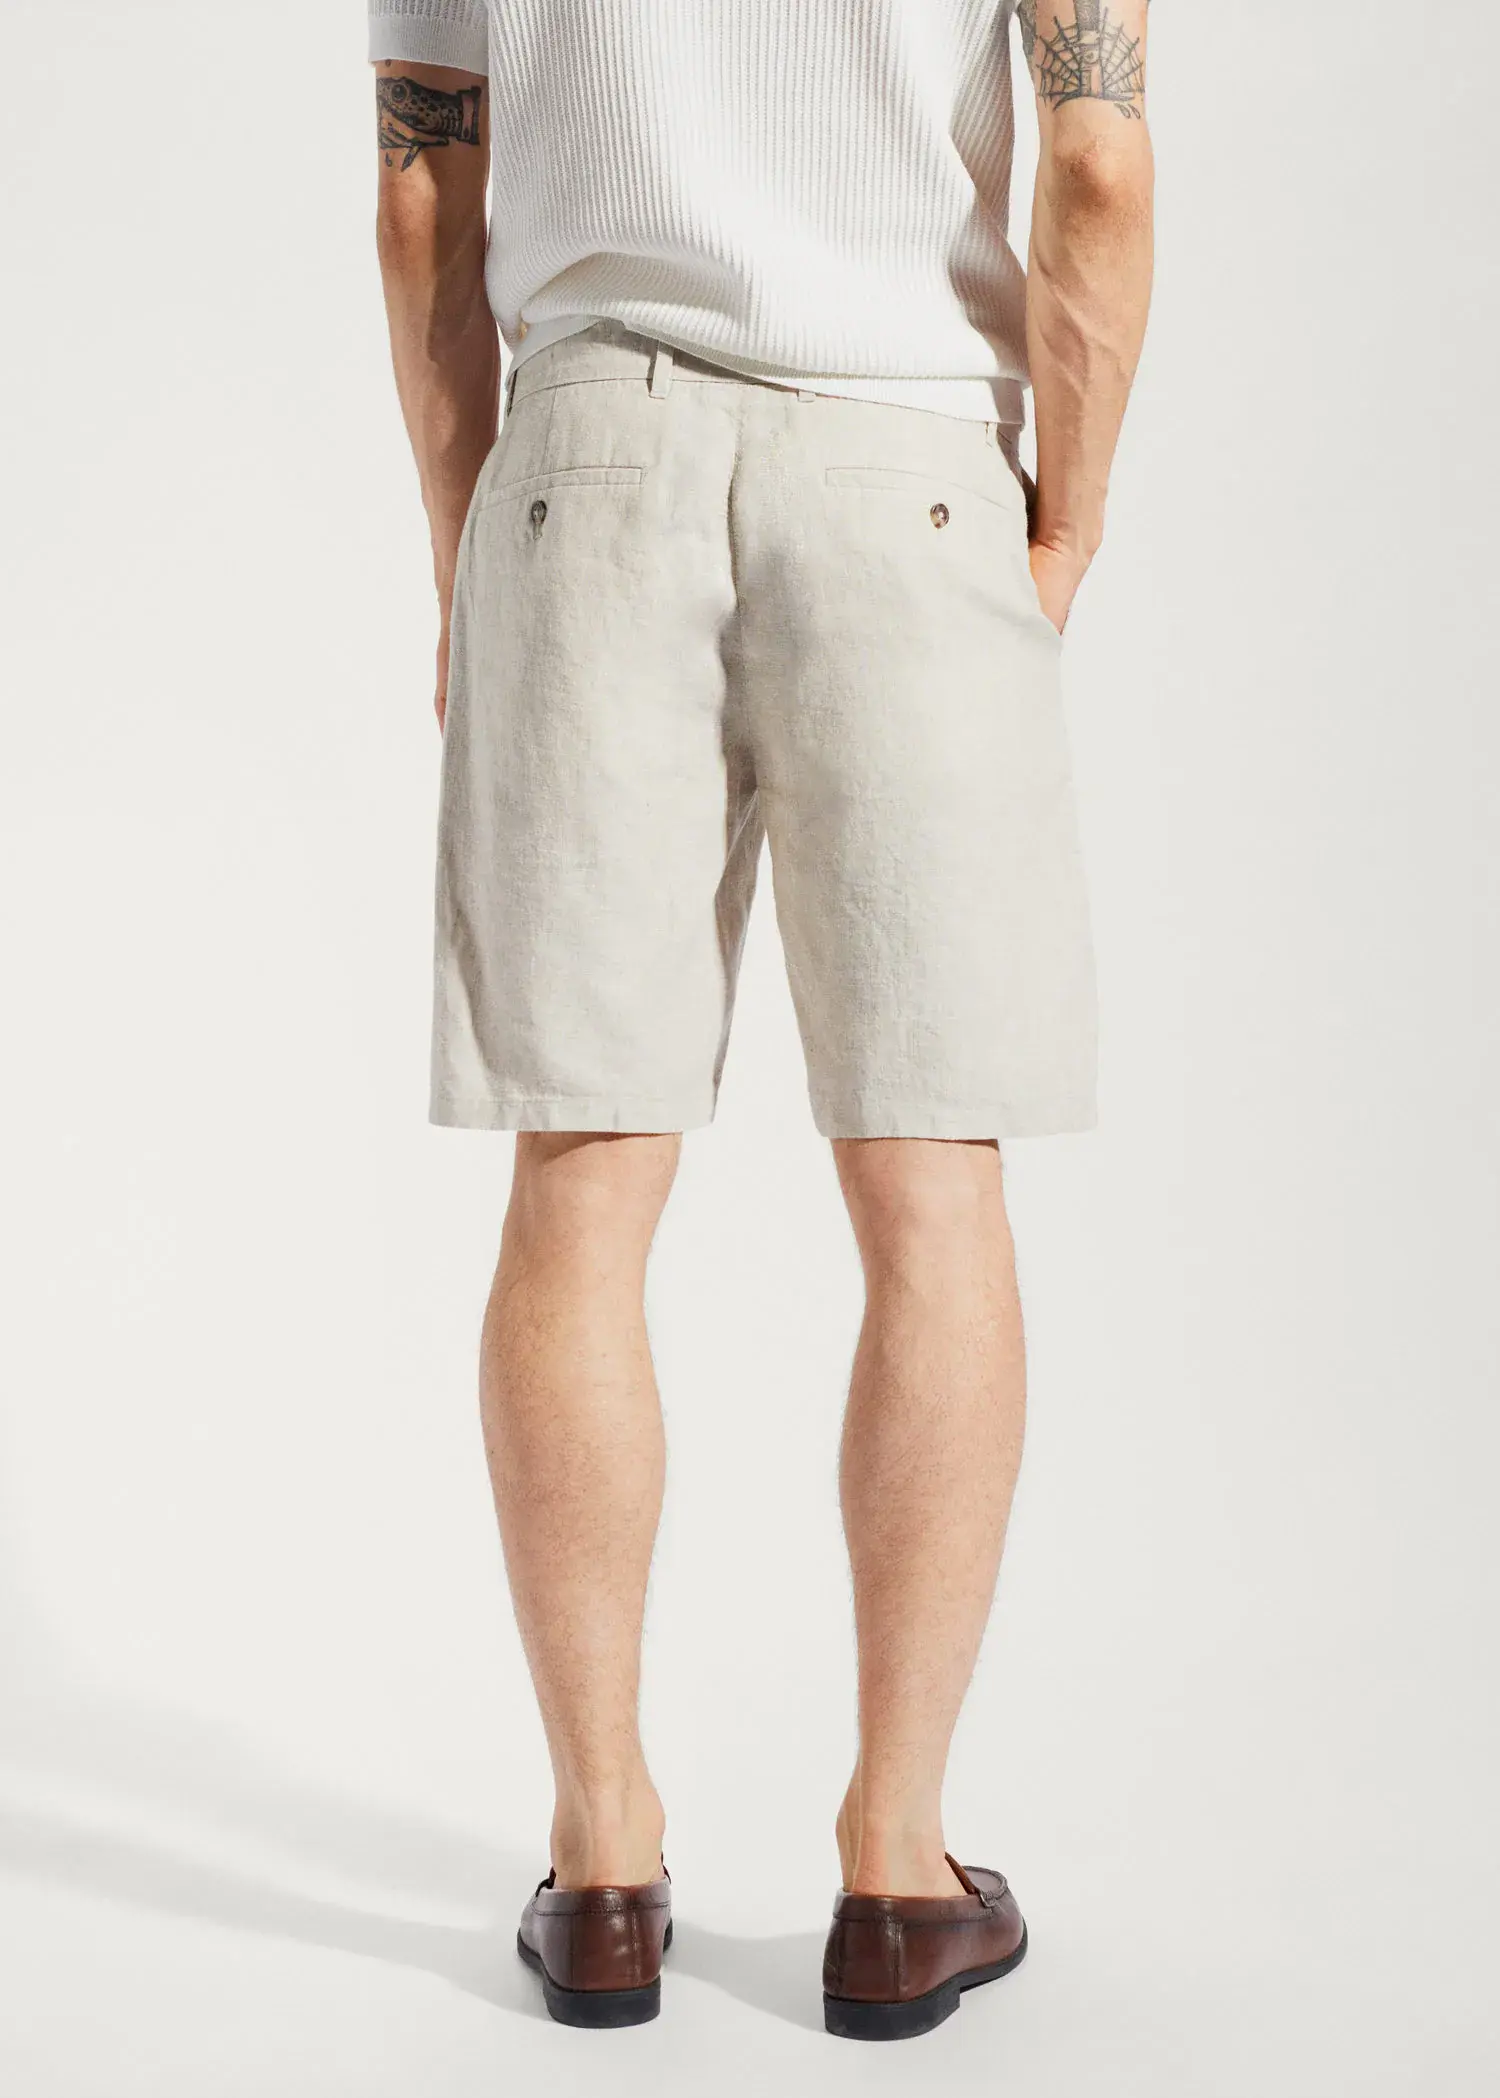 Mango 100% linen shorts. a man wearing a pair of white shorts. 